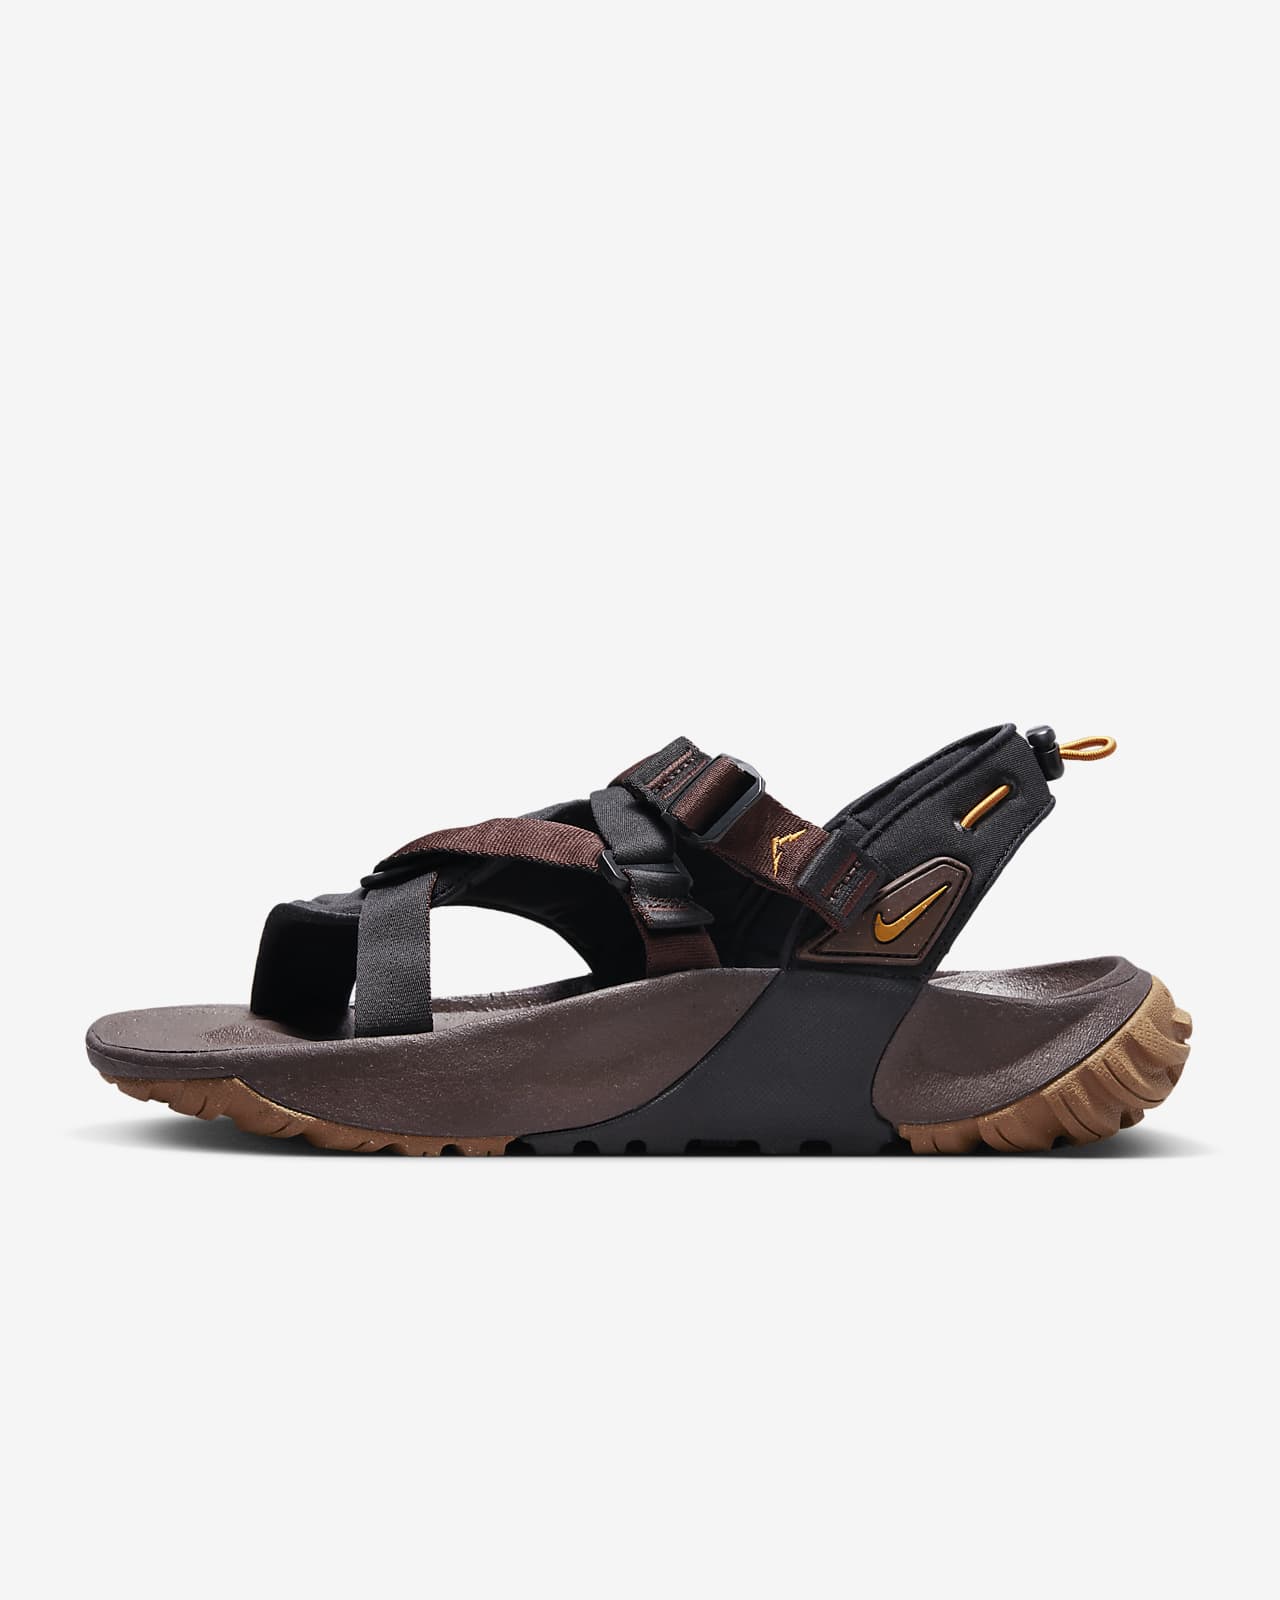 Nike Canyon Men's sandals (Black_7 UK (7.5 US)_CI8797-009) : Amazon.in:  Fashion